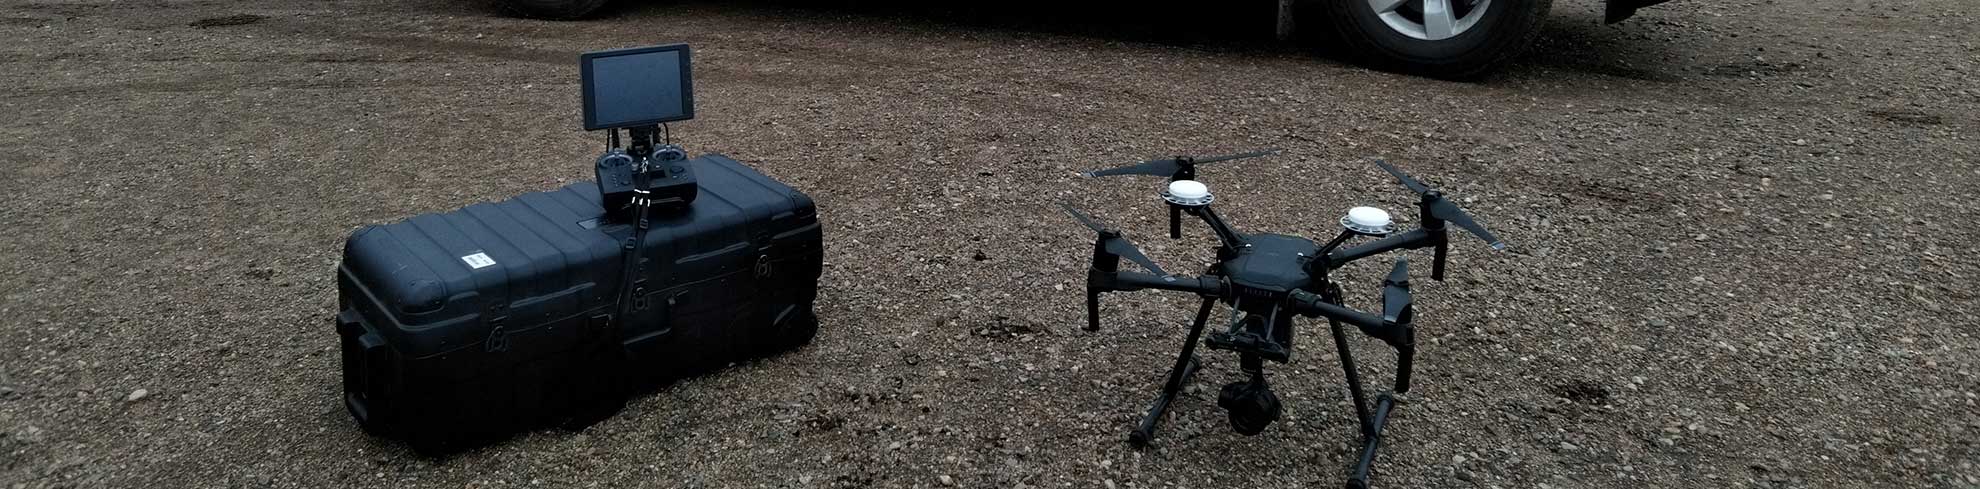 drone equipment